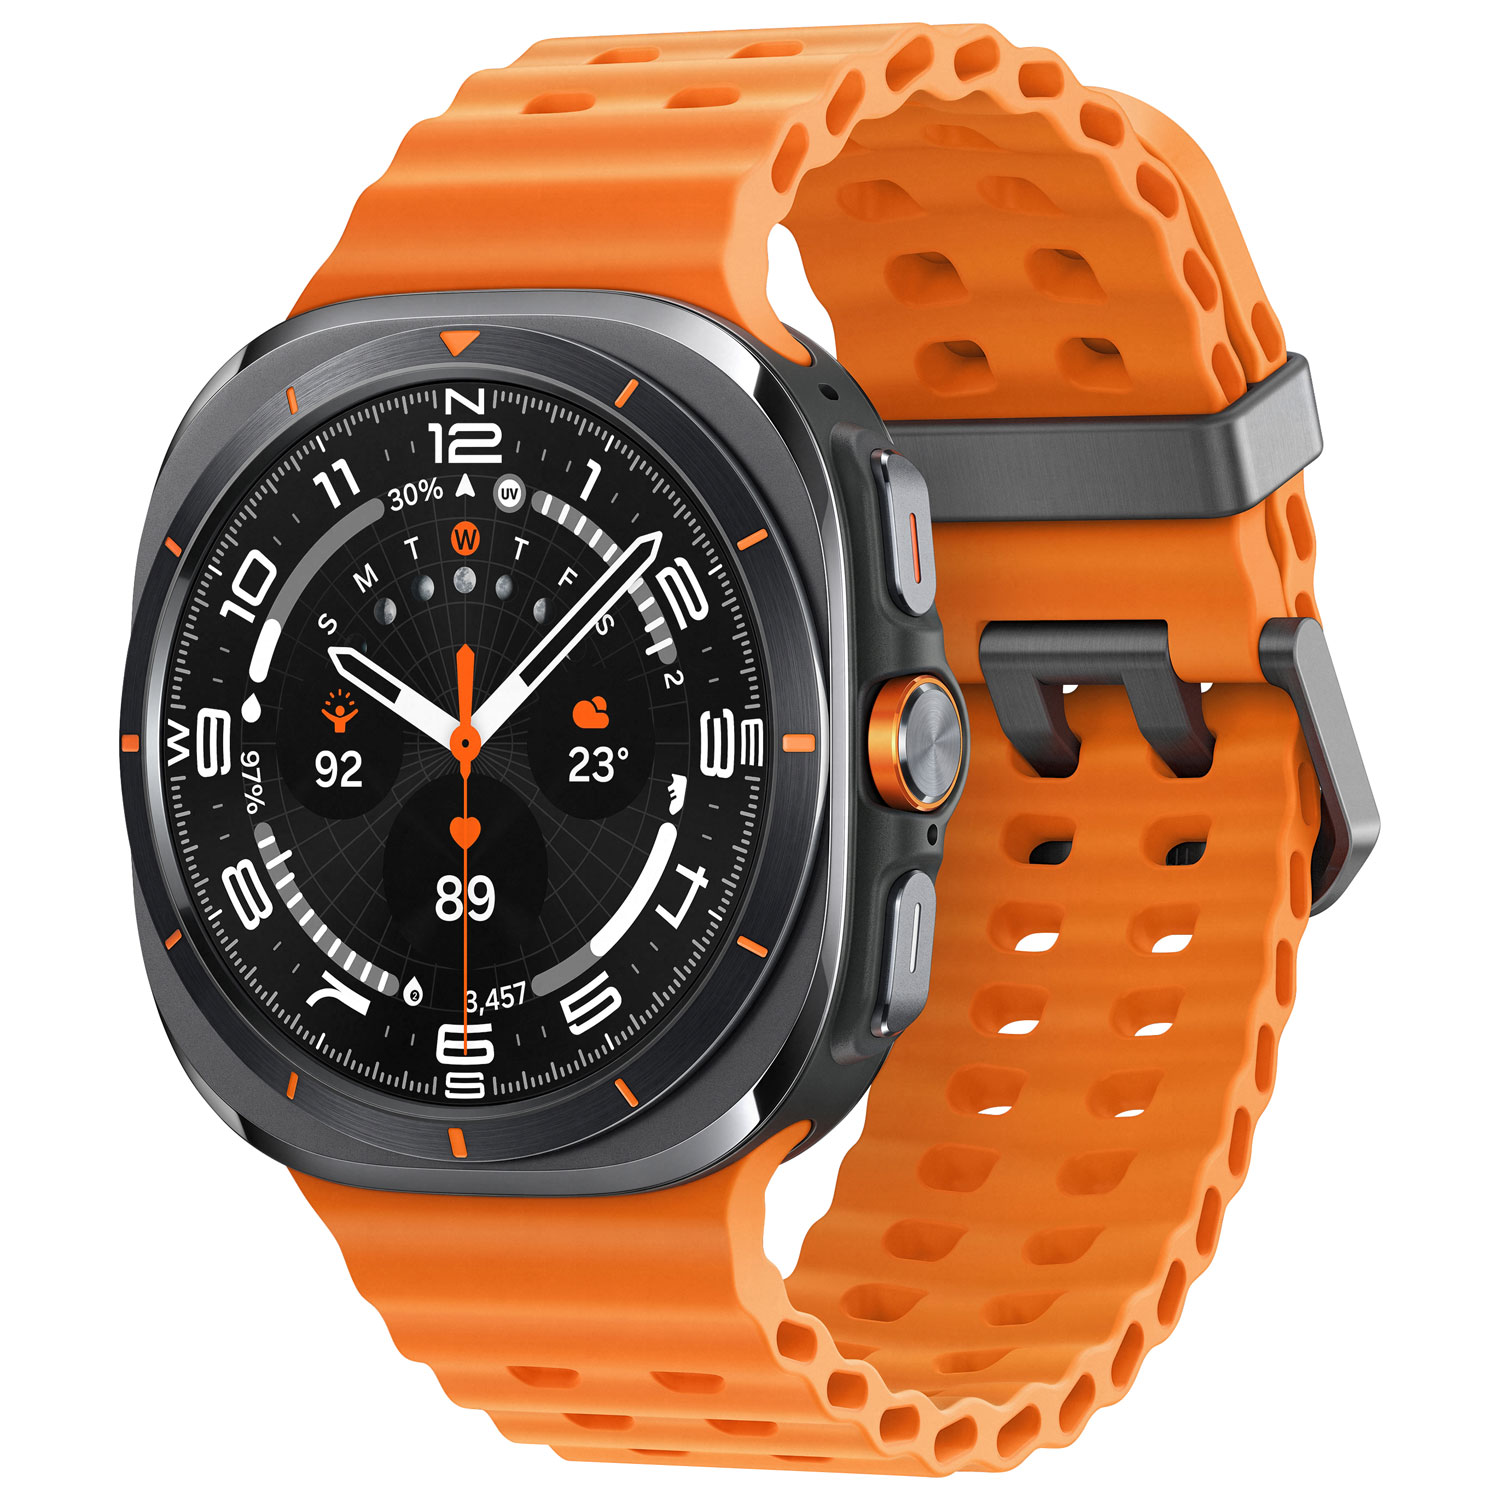 Samsung Galaxy Watch Ultra (GPS + LTE) 47mm Smartwatch with Heart Rate Monitor - Titanium Grey/Orange